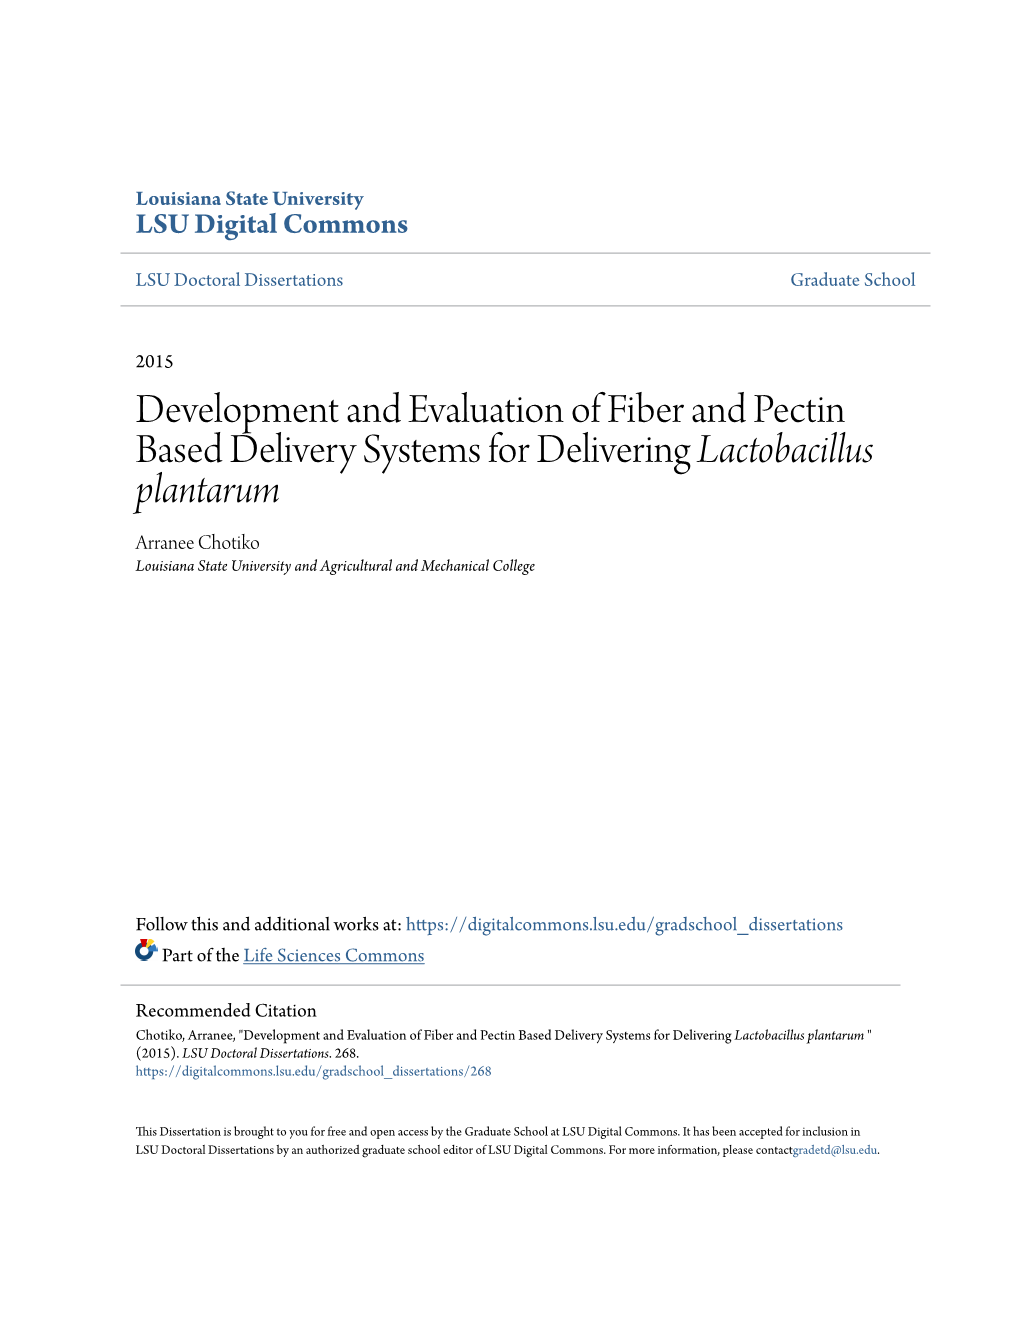 Development and Evaluation of Fiber and Pectin